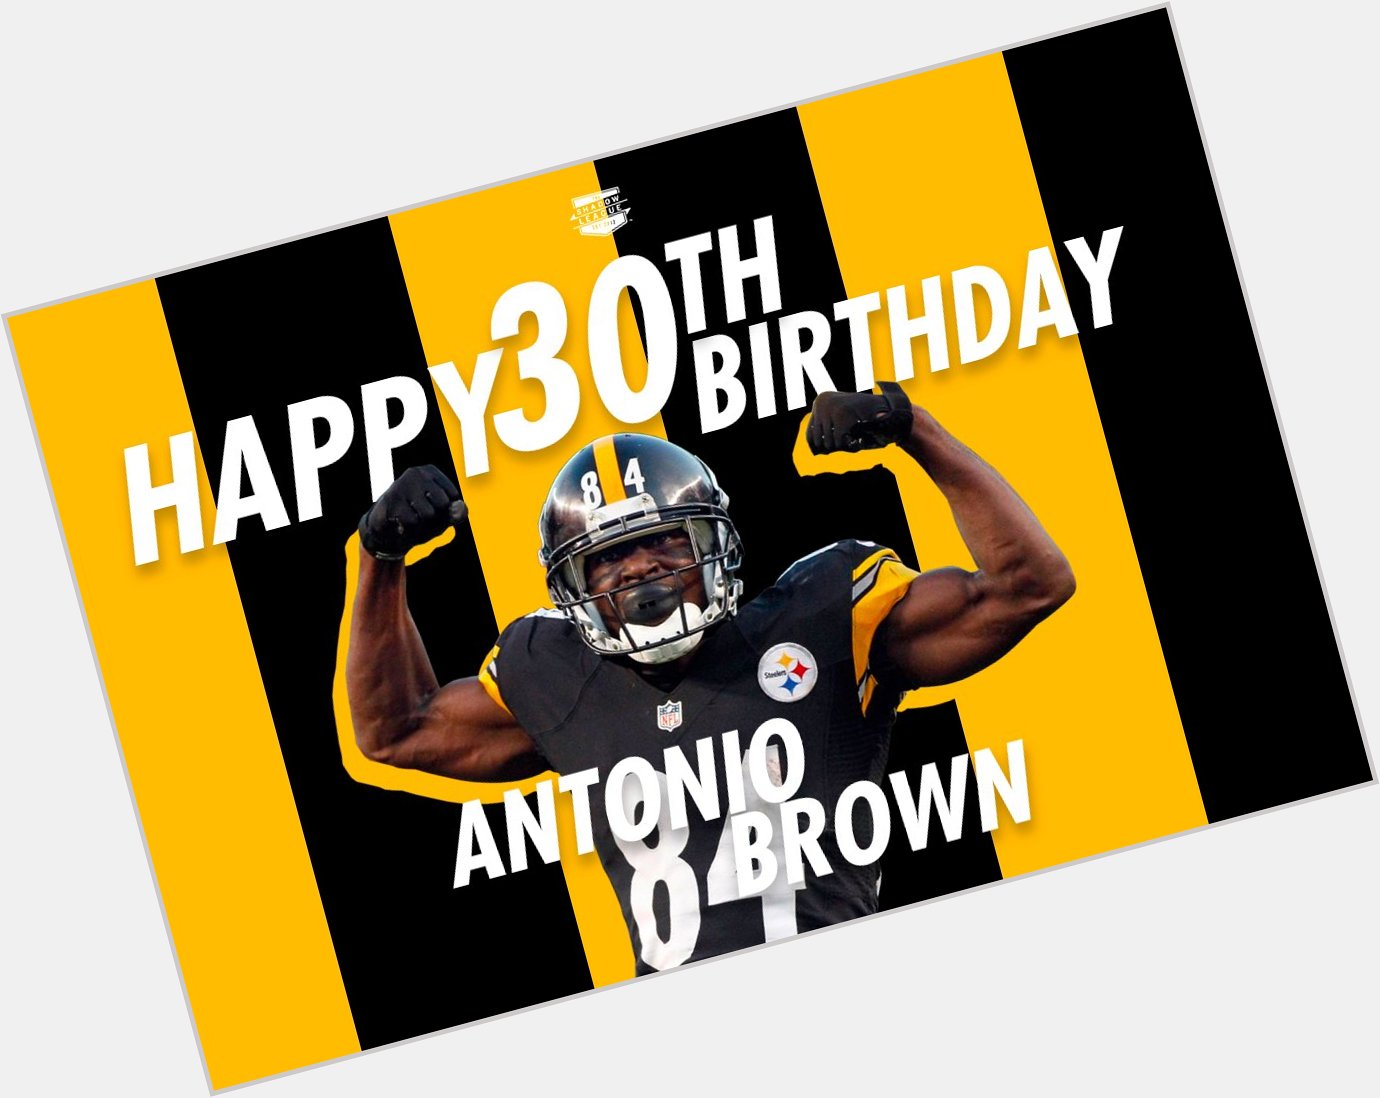 Happy 30th birthday to Antonio Brown! 